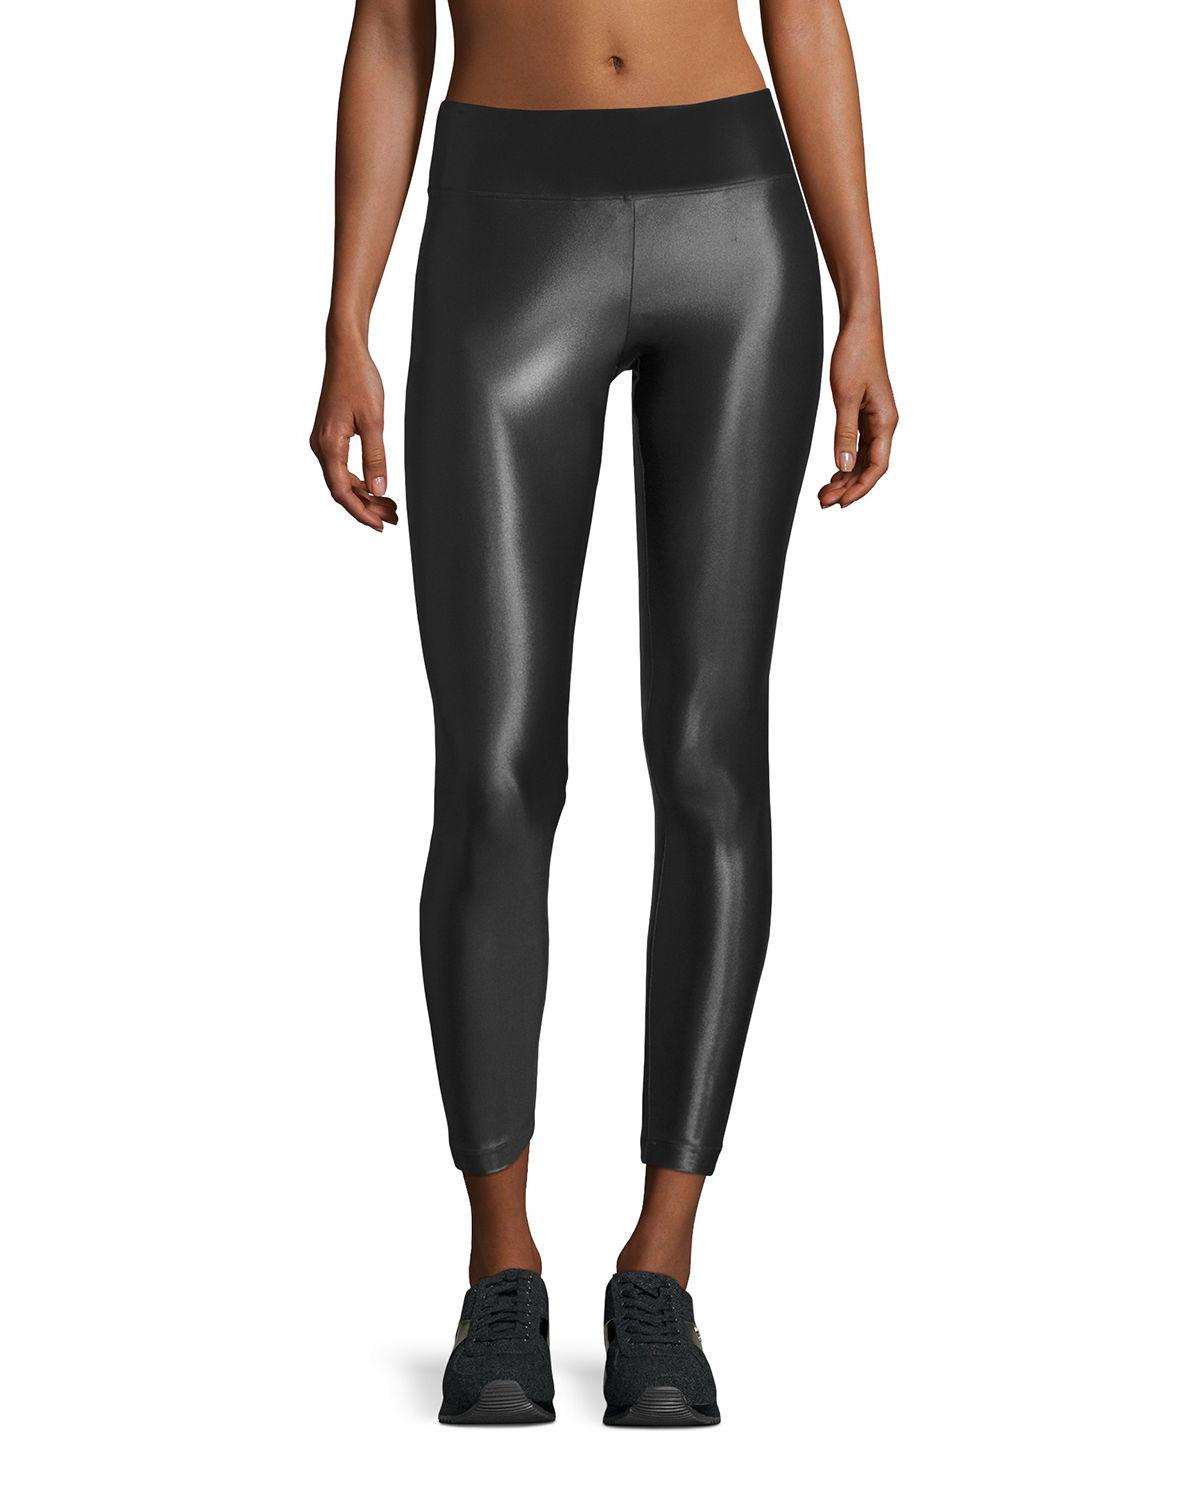 Koral activewear Lustrous Shiny Athletic Leggings in Black | Lyst